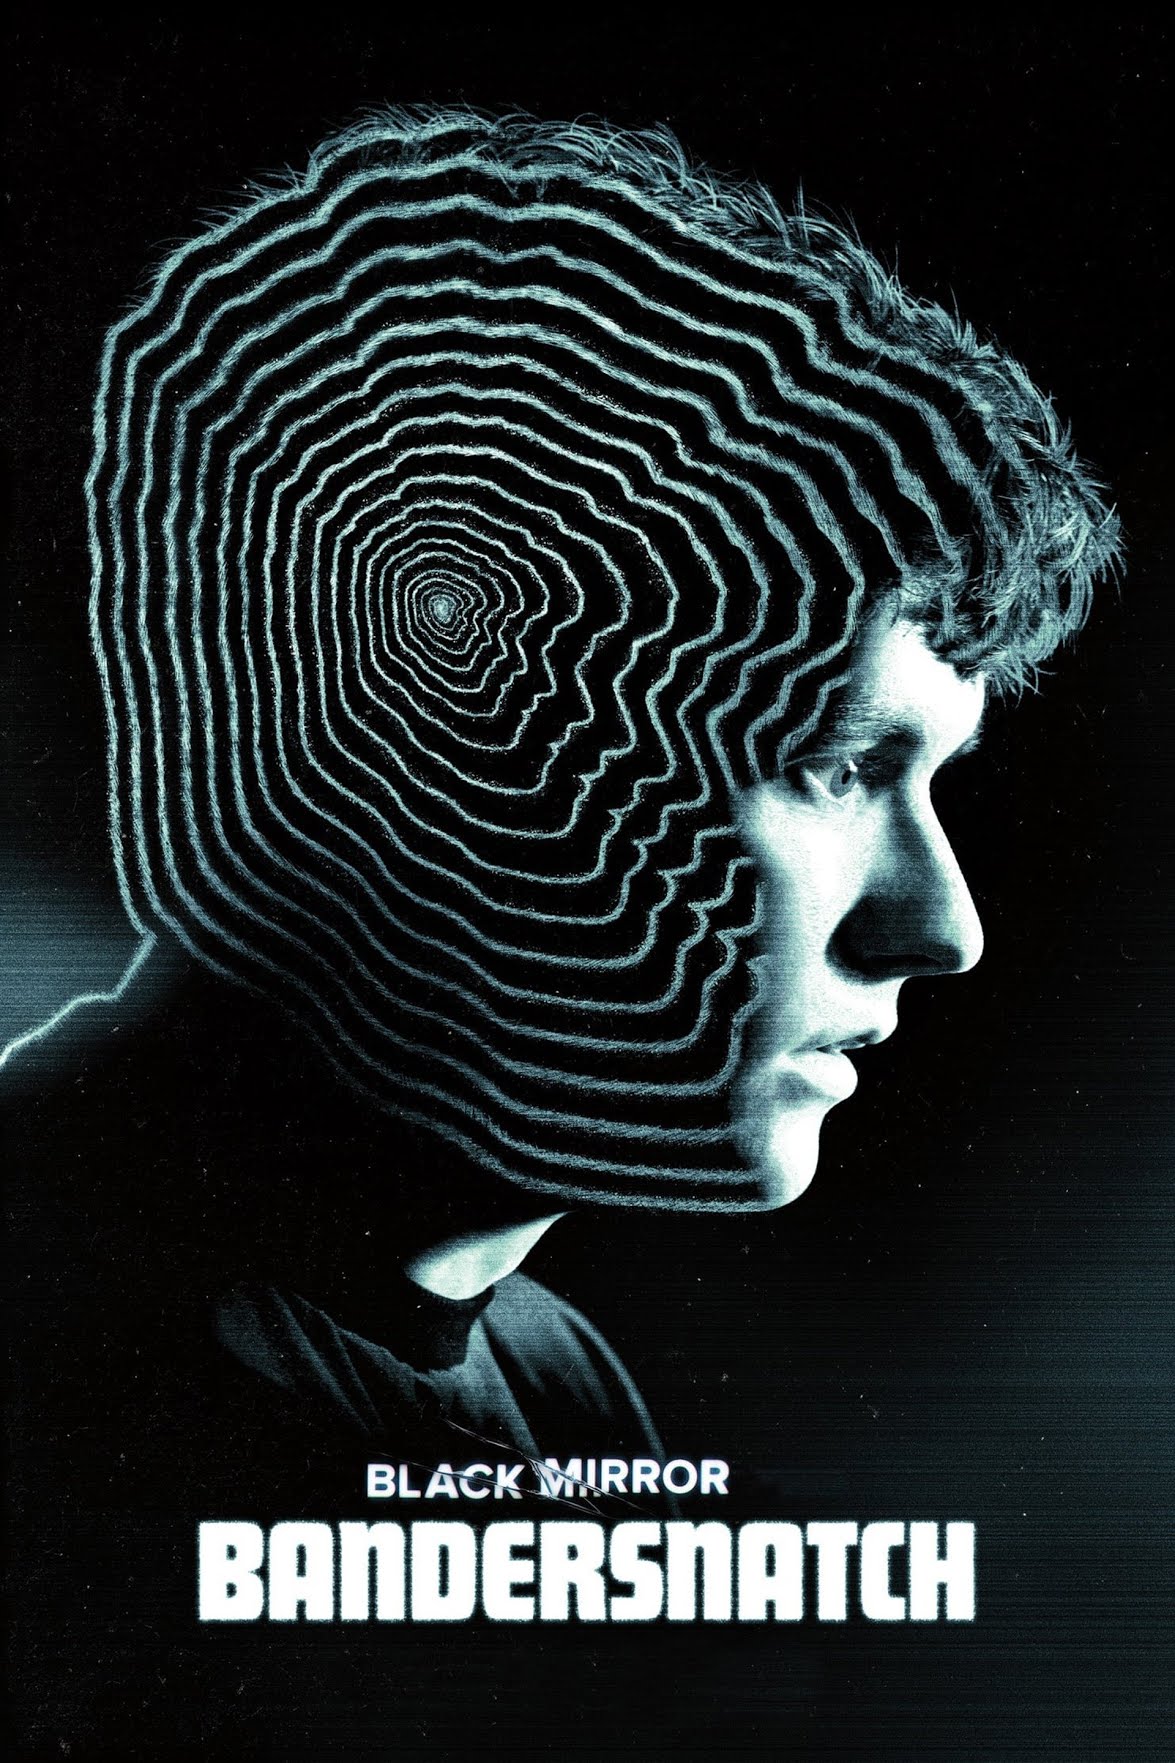 Poster for Black Mirror's film 